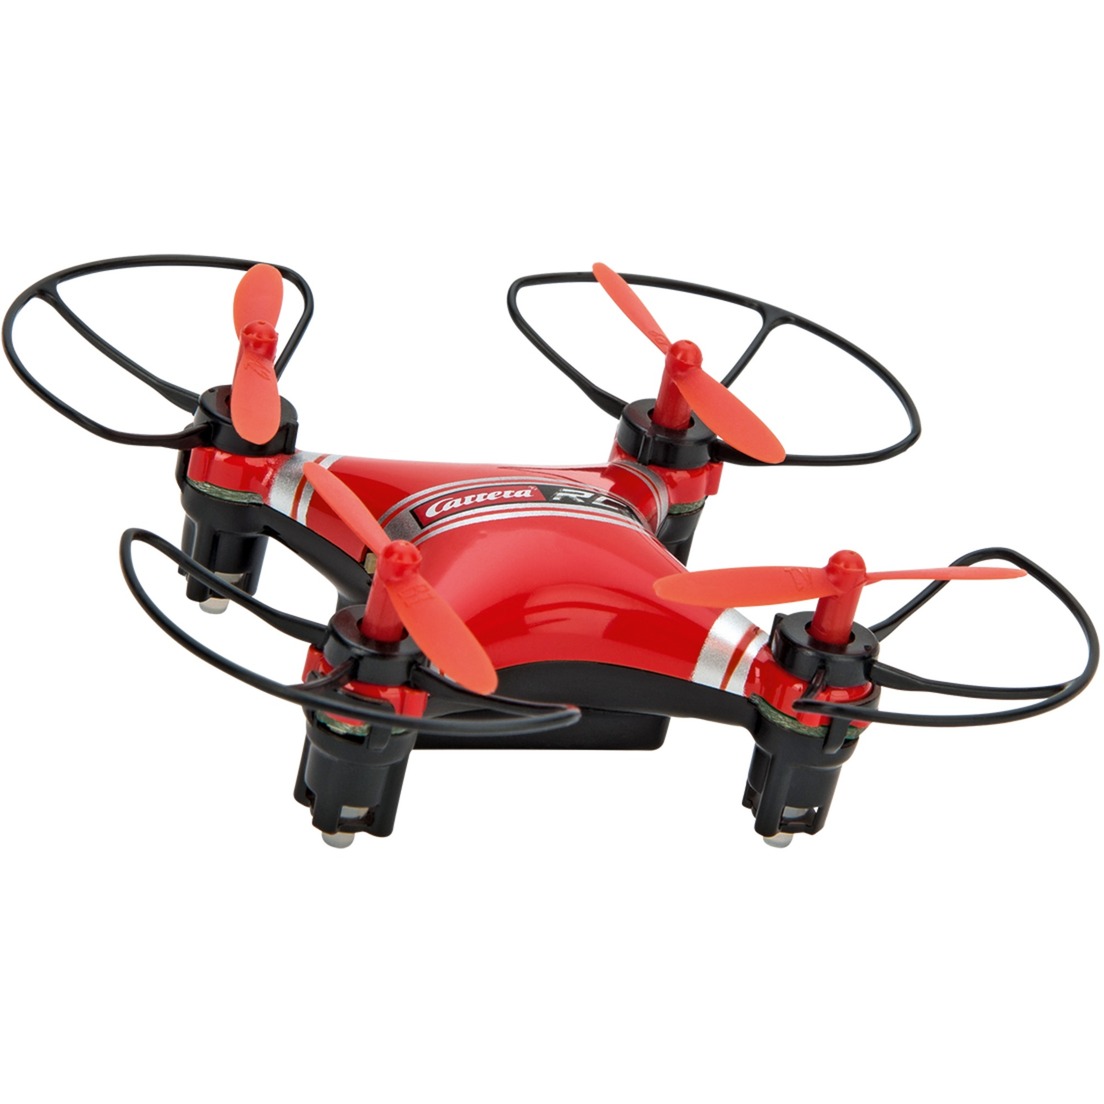 Image of Alternate - RC Micro Quadrocopter, Drohne online einkaufen bei Alternate